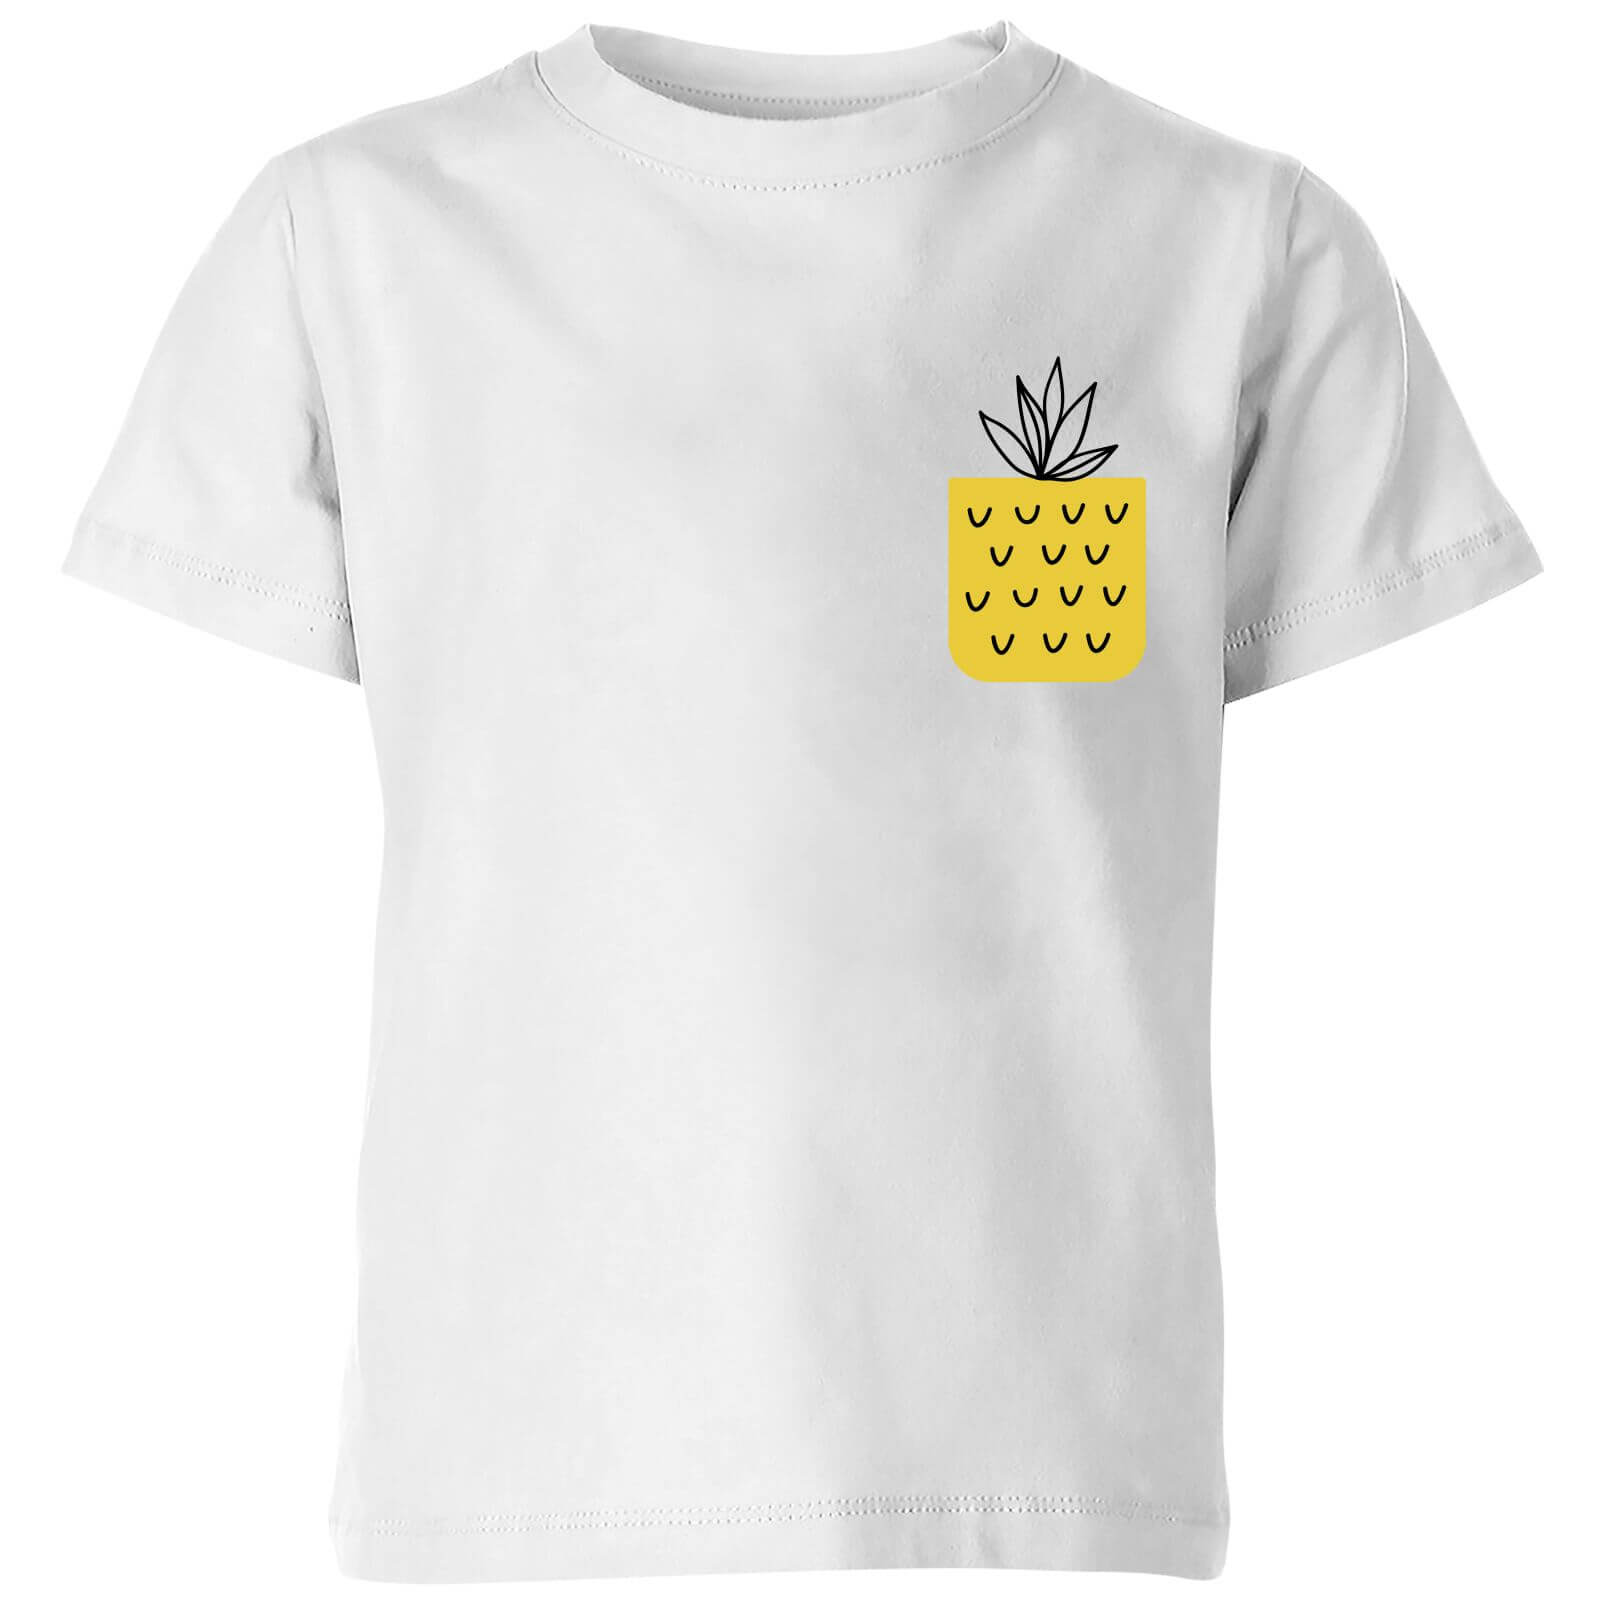 My Little Rascal Pineapple Pocket Kids' T-Shirt - White - 3-4 Years - White